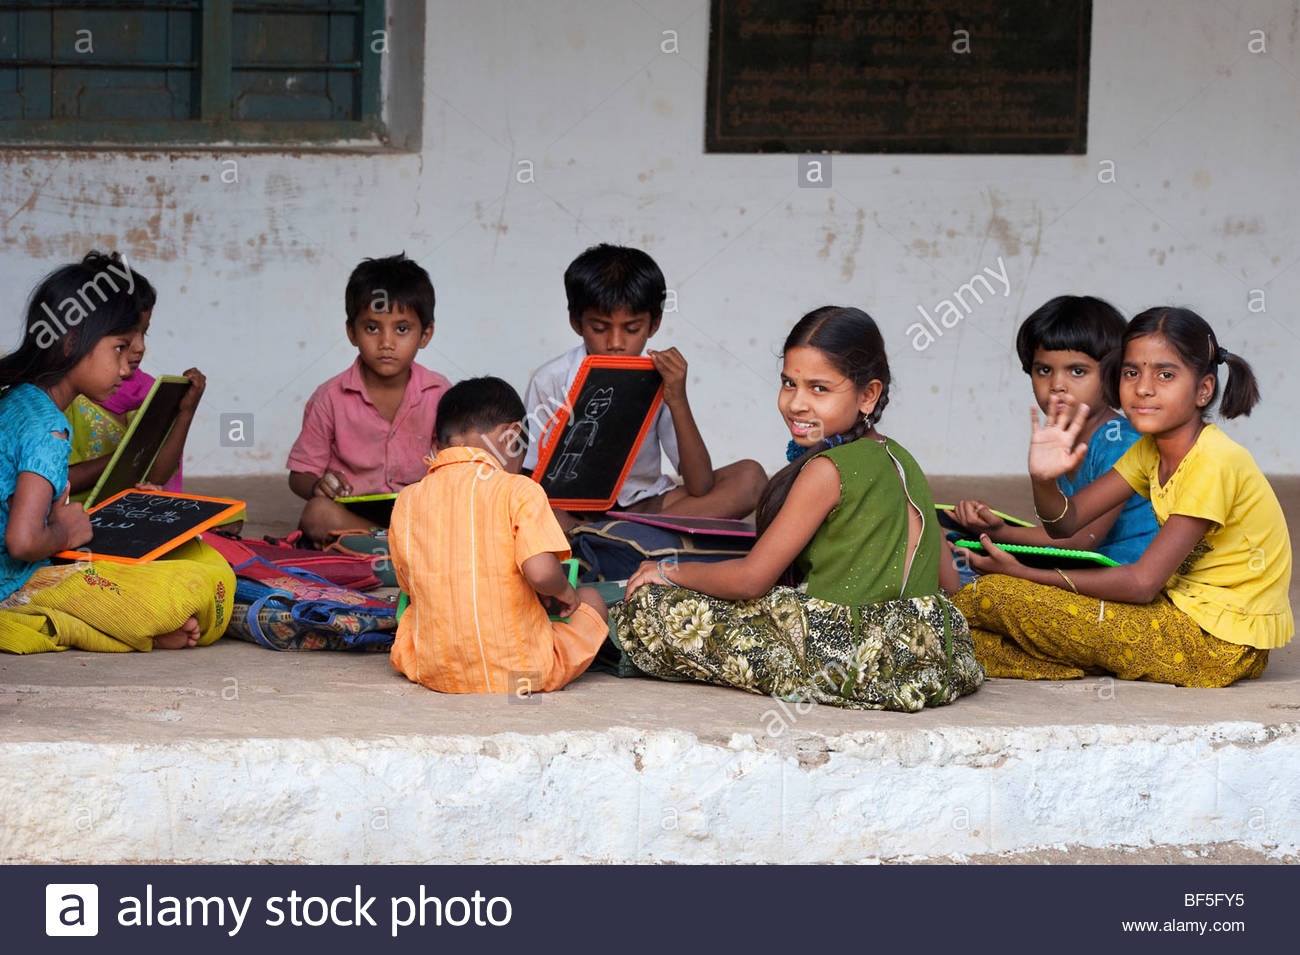 indian-school-children-sitting-outside-their-school-writing-on-chalkboards-BF5FY5_1618563270.jpg